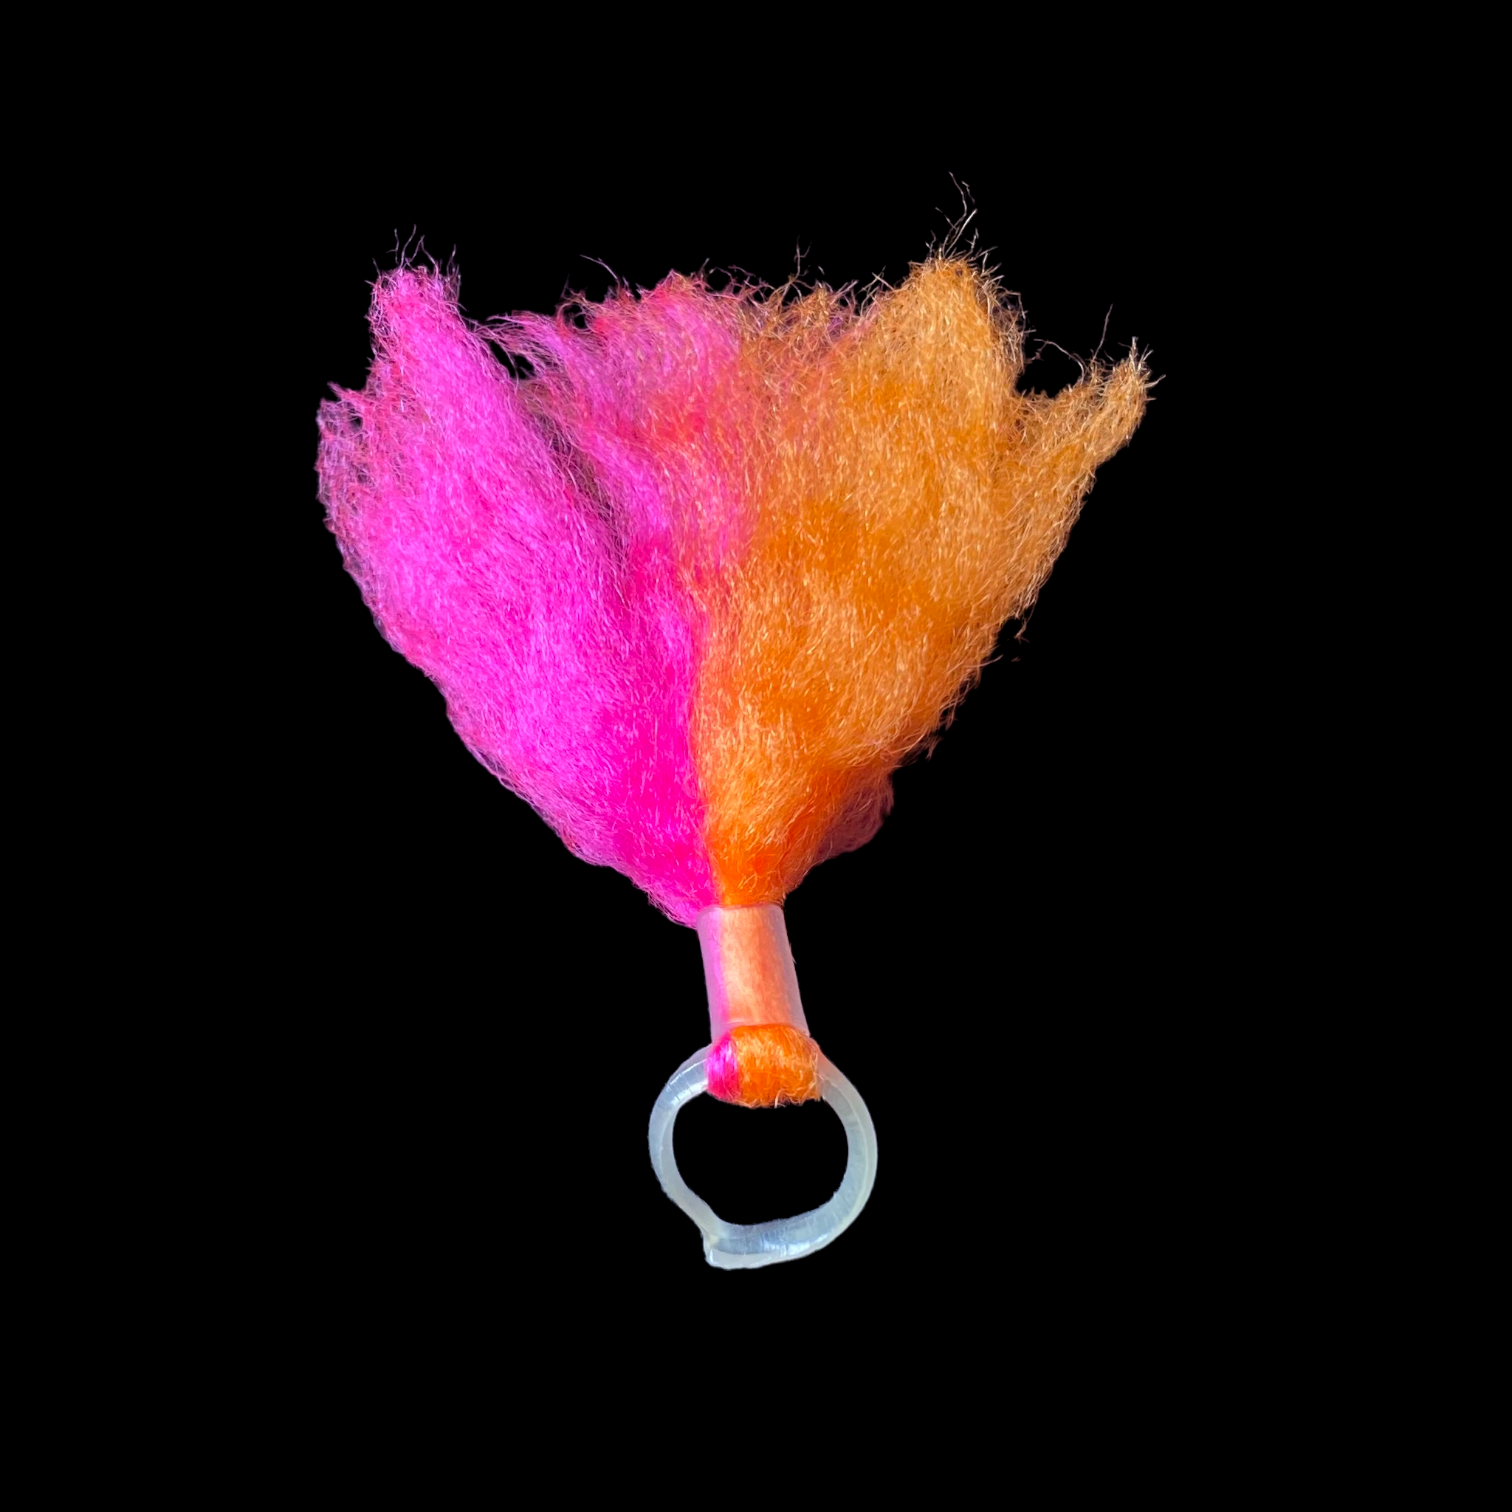 Upavon Bi-Colour Floating Yarn Strike Indicators - Upavon Fly Fishing